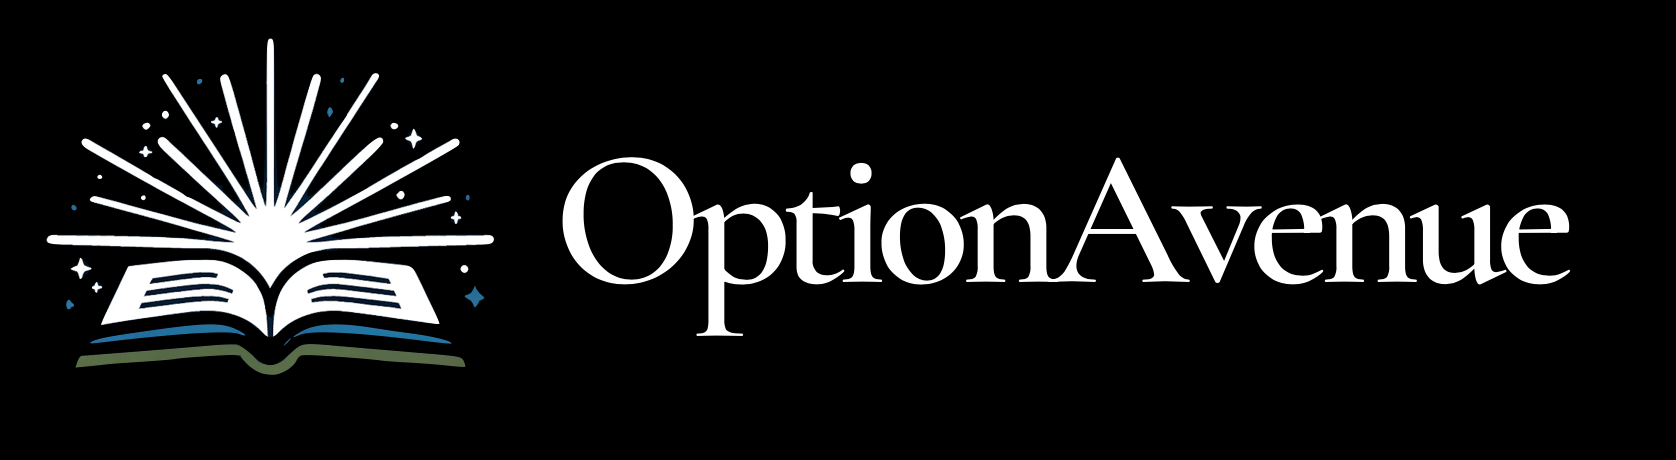 OptionAvenue - Wide Logo